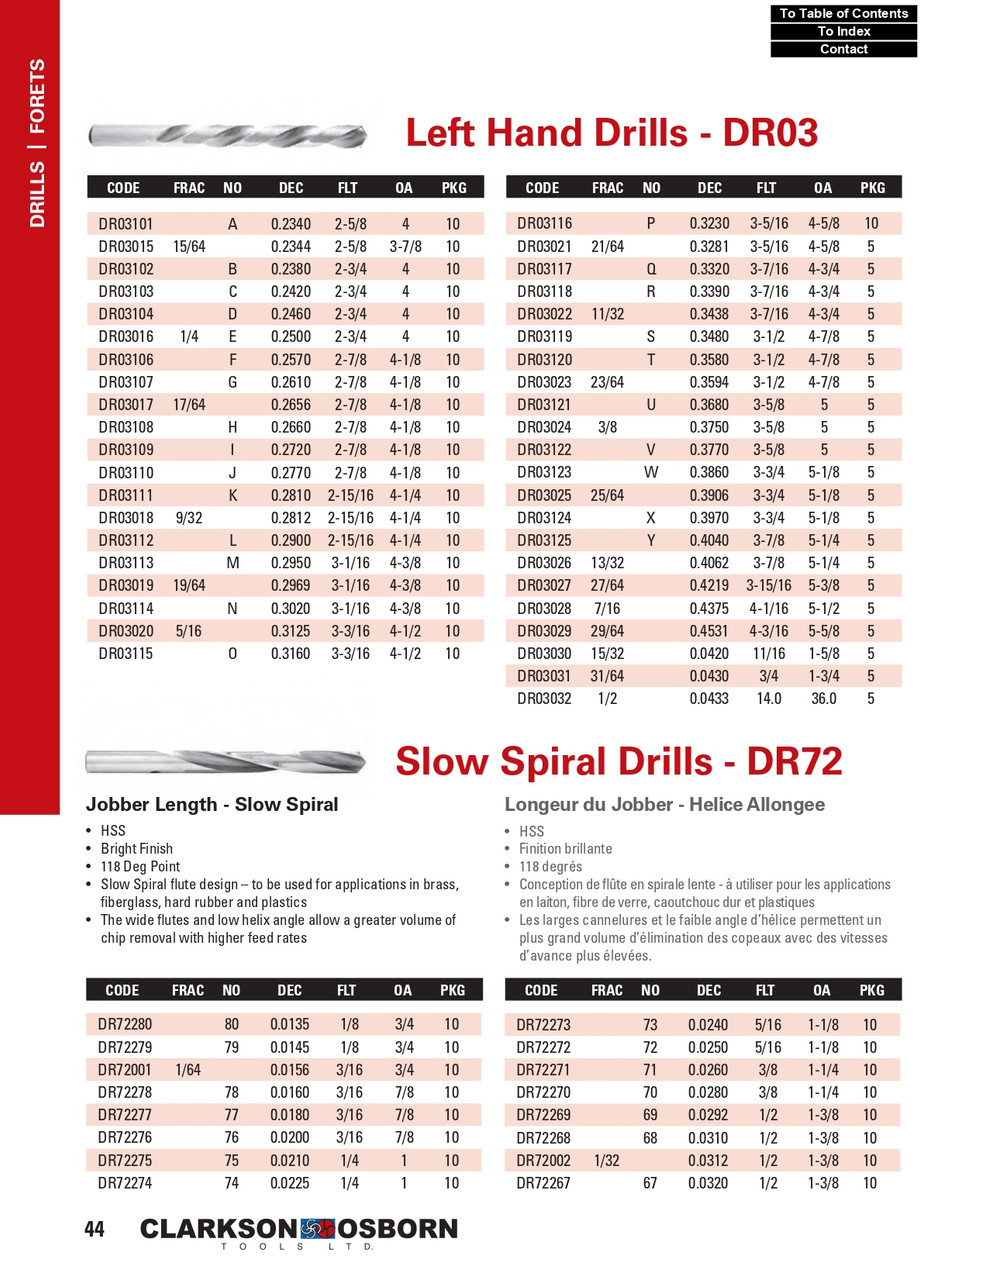 "C" Bright Finish Slow Spiral Jobber Drill Bit   DR72103